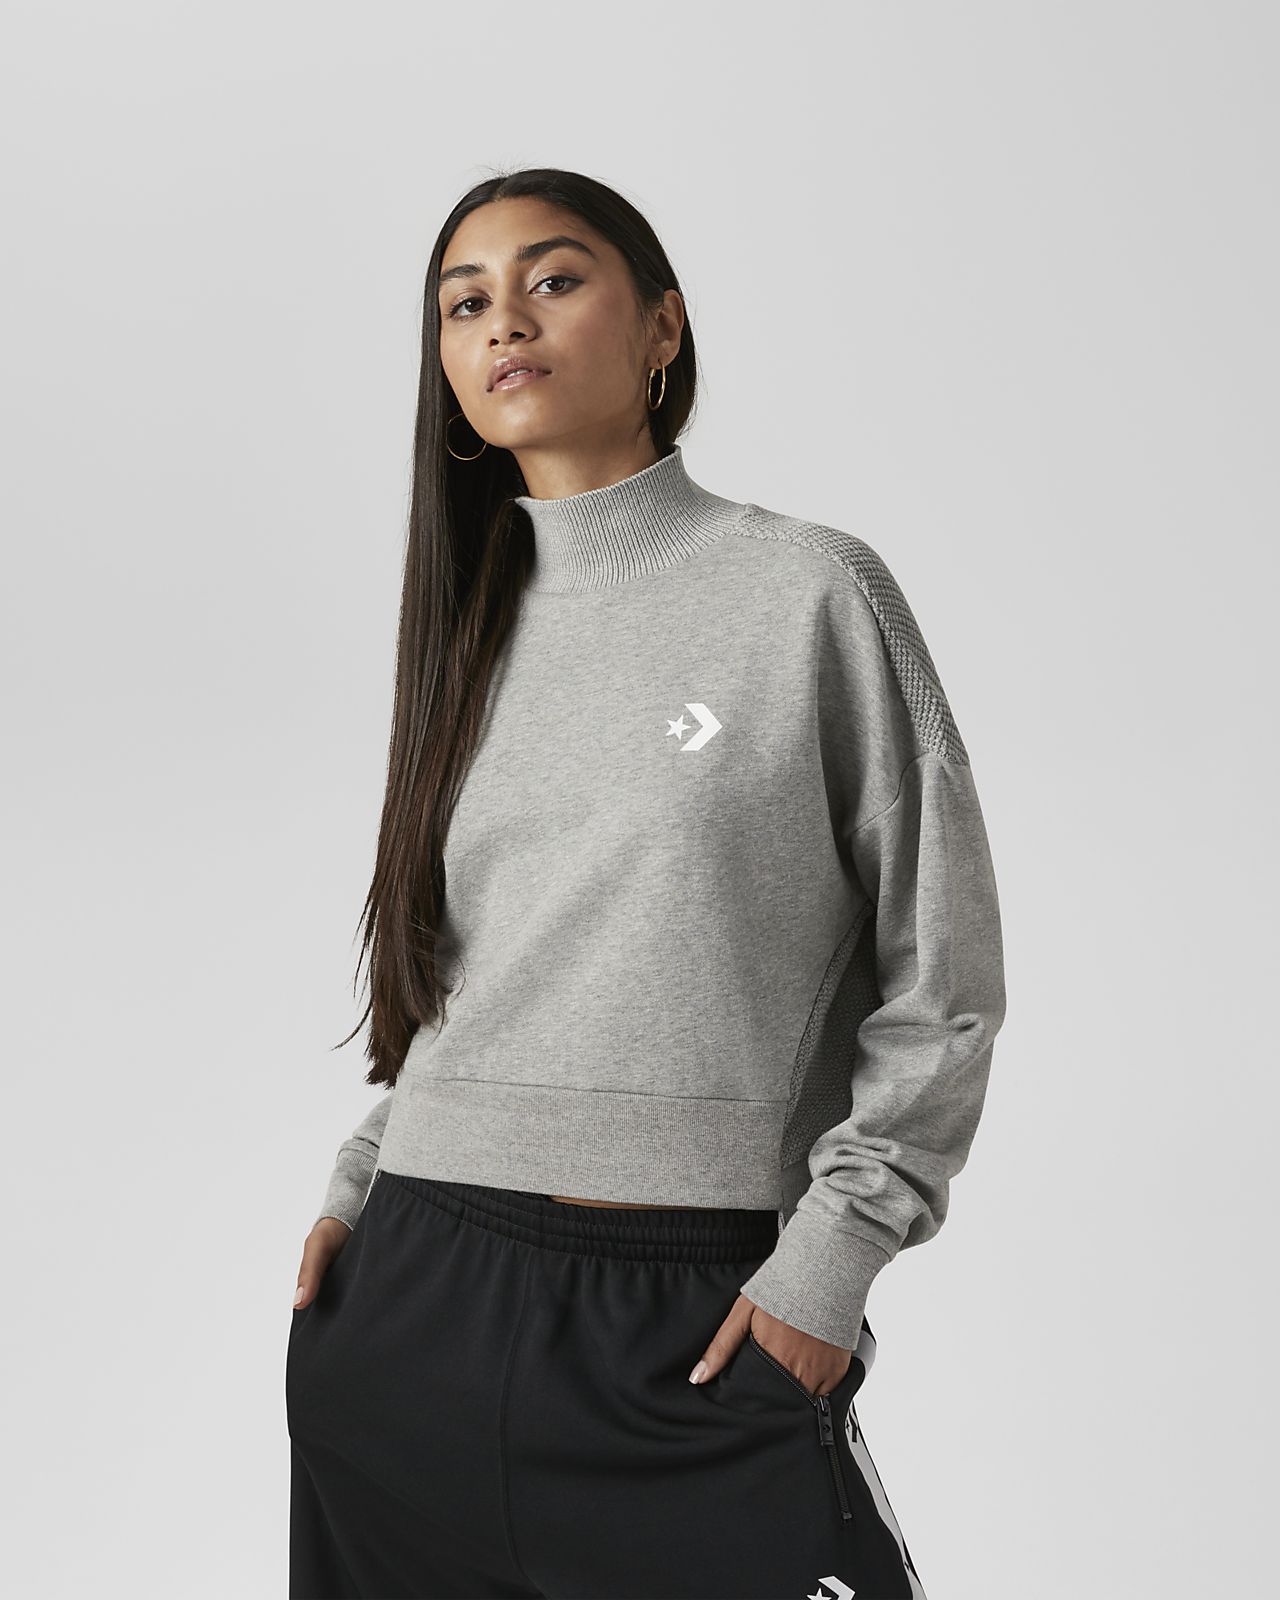 Download Converse Sweater Women's Mock-Neck Knit Shirt. Nike.com